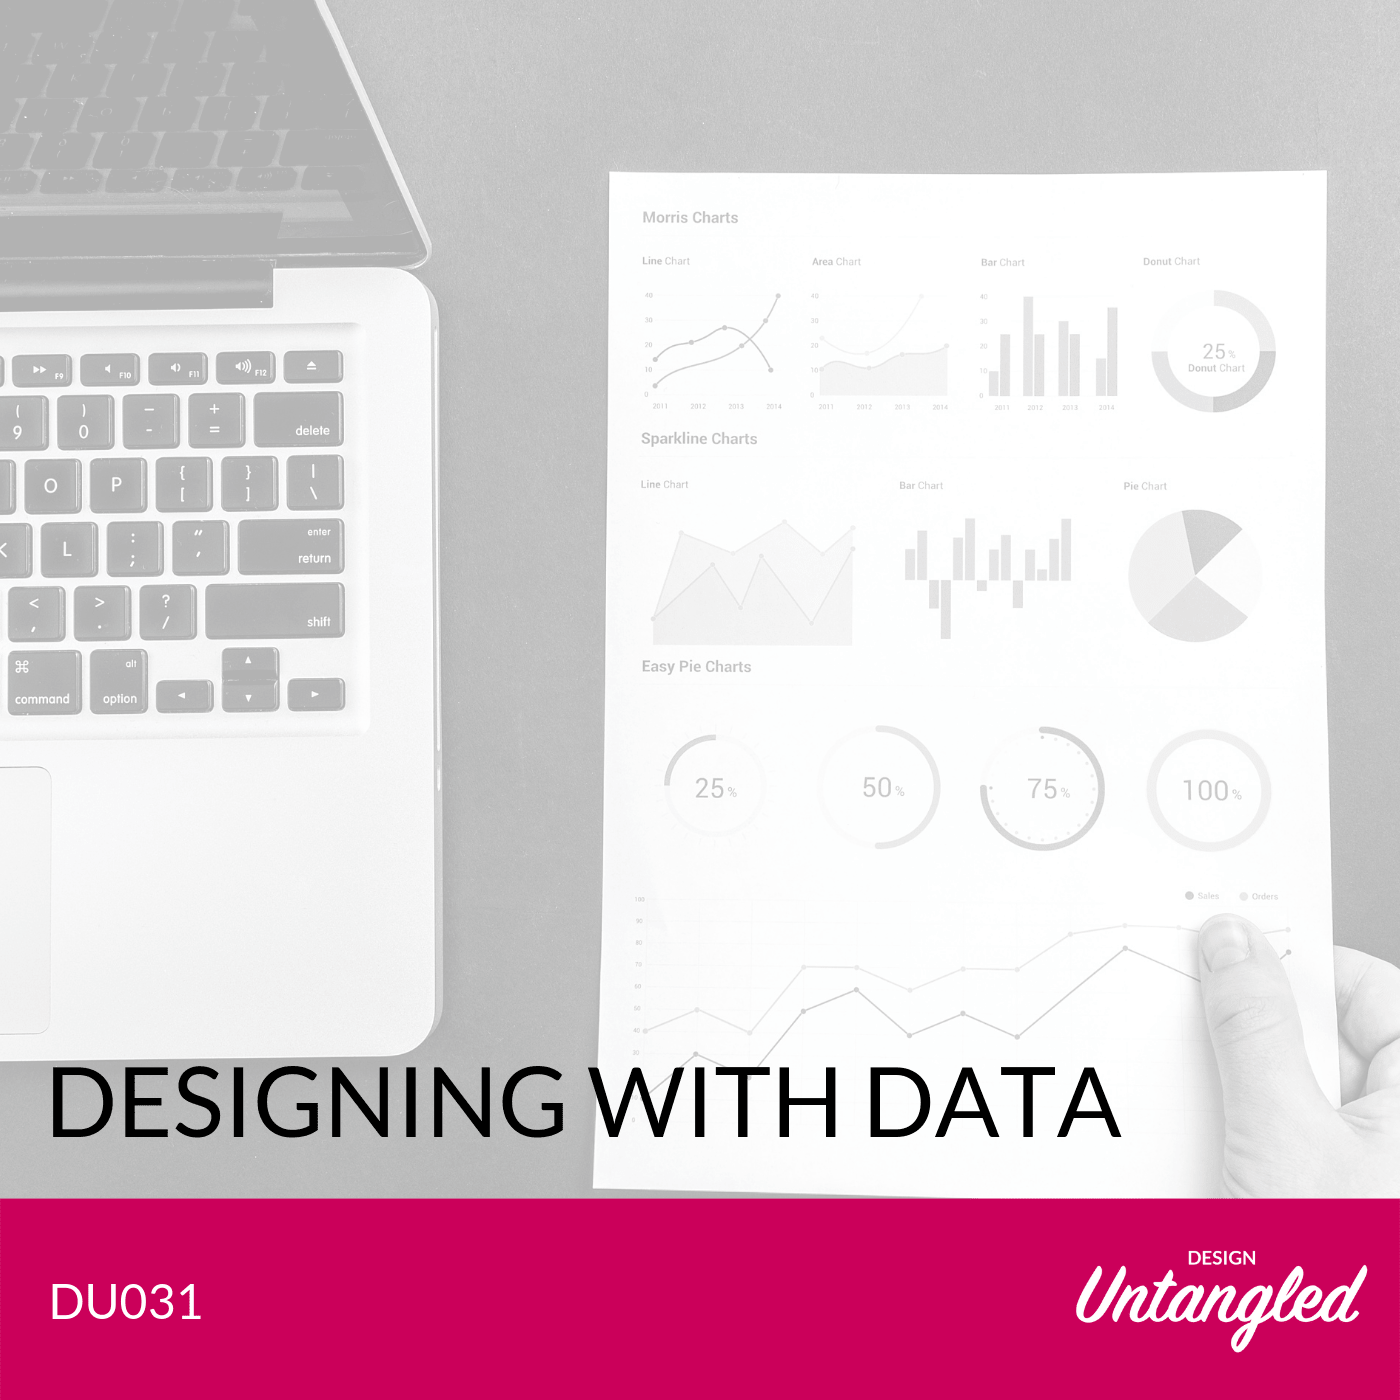 DU031 – Designing with Data